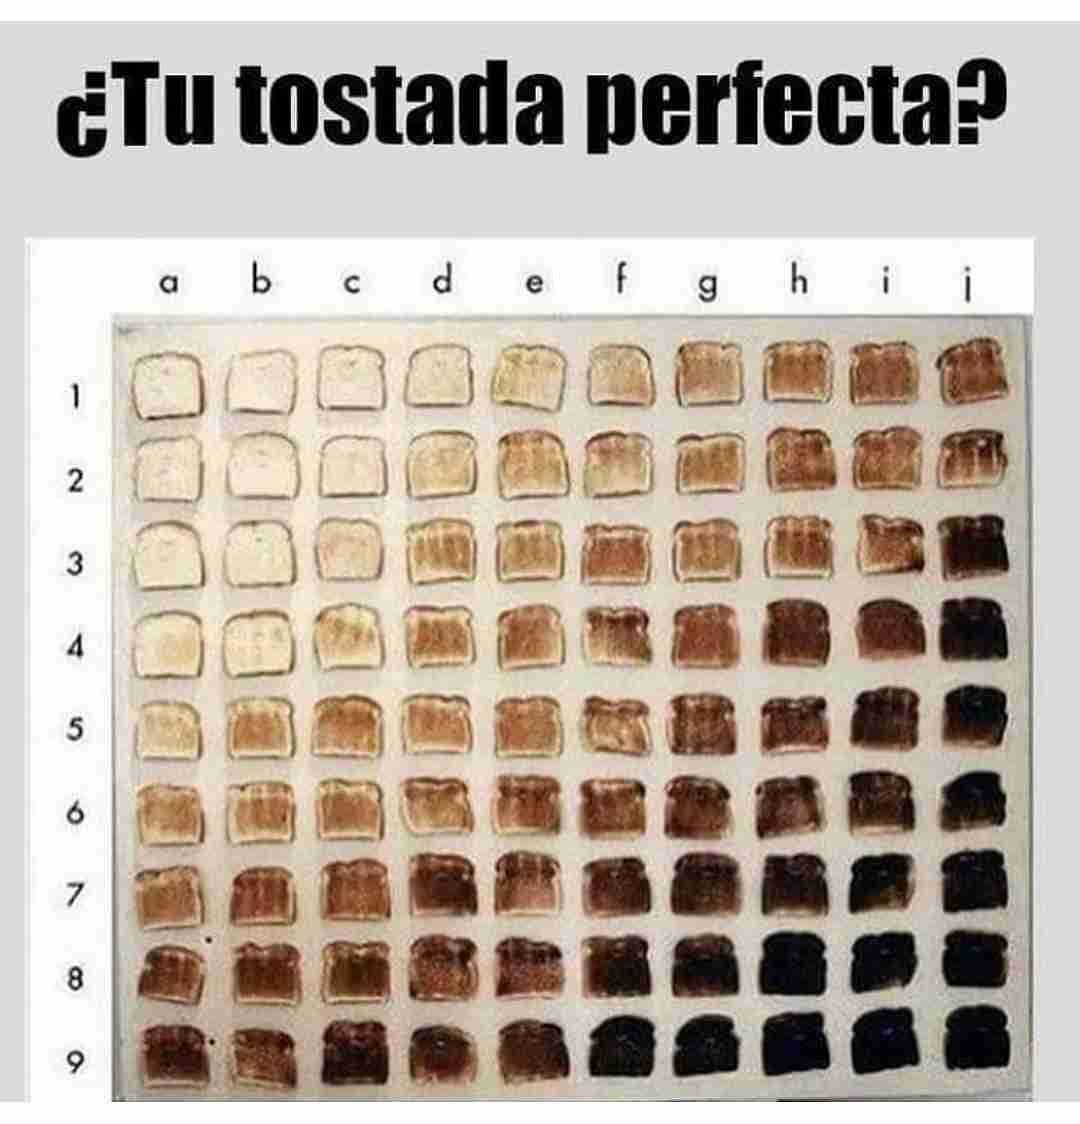 ¿Tu tostada perfecta?